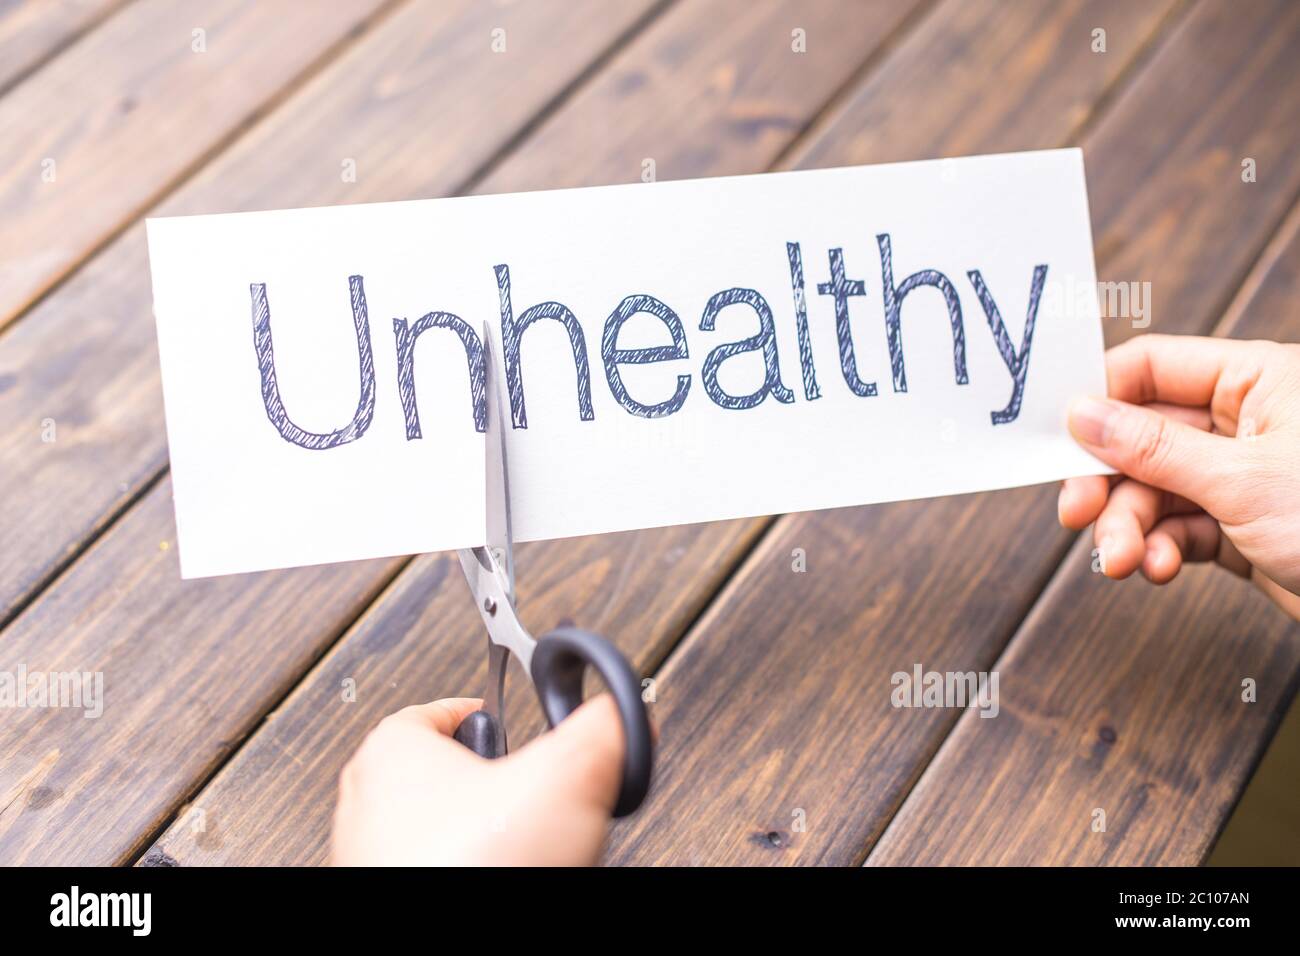 unhealthy to heathy by scissors Stock Photo